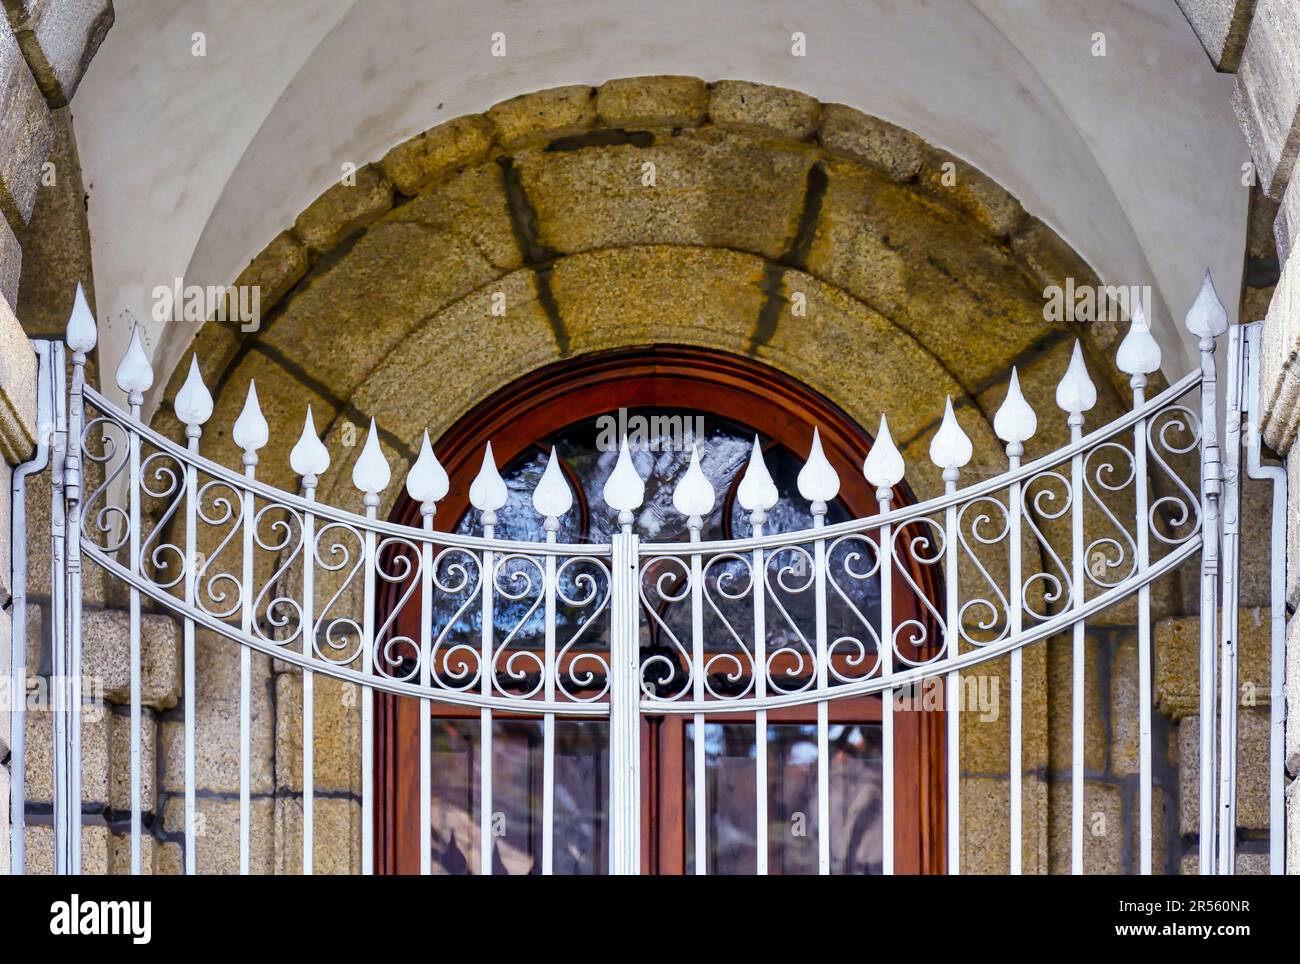 Das äußere architektonische Merkmal des Kolonialgebäudes Hospital de Saint Antony in Porto, Portugal Stockfoto